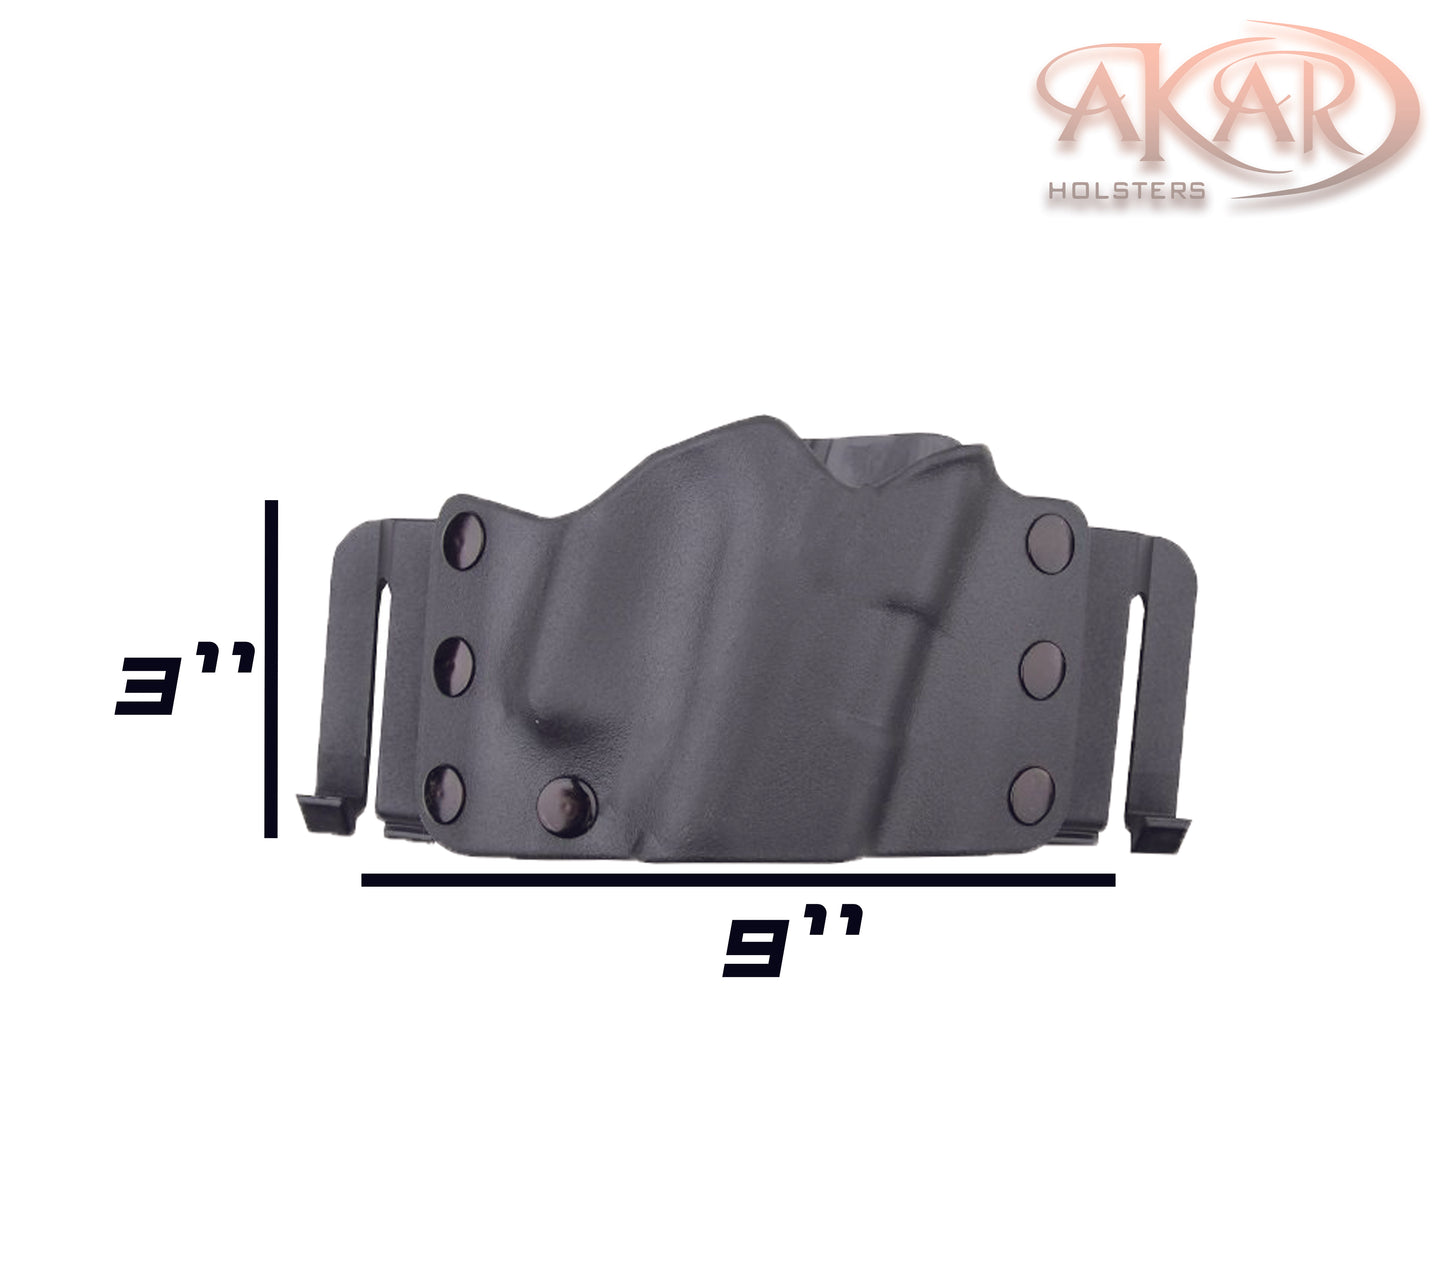 H&K USP45 Pistols & Similar Frames - Akar Scorpion OWB Kydex Gun Holster W/Quick Belt Clips